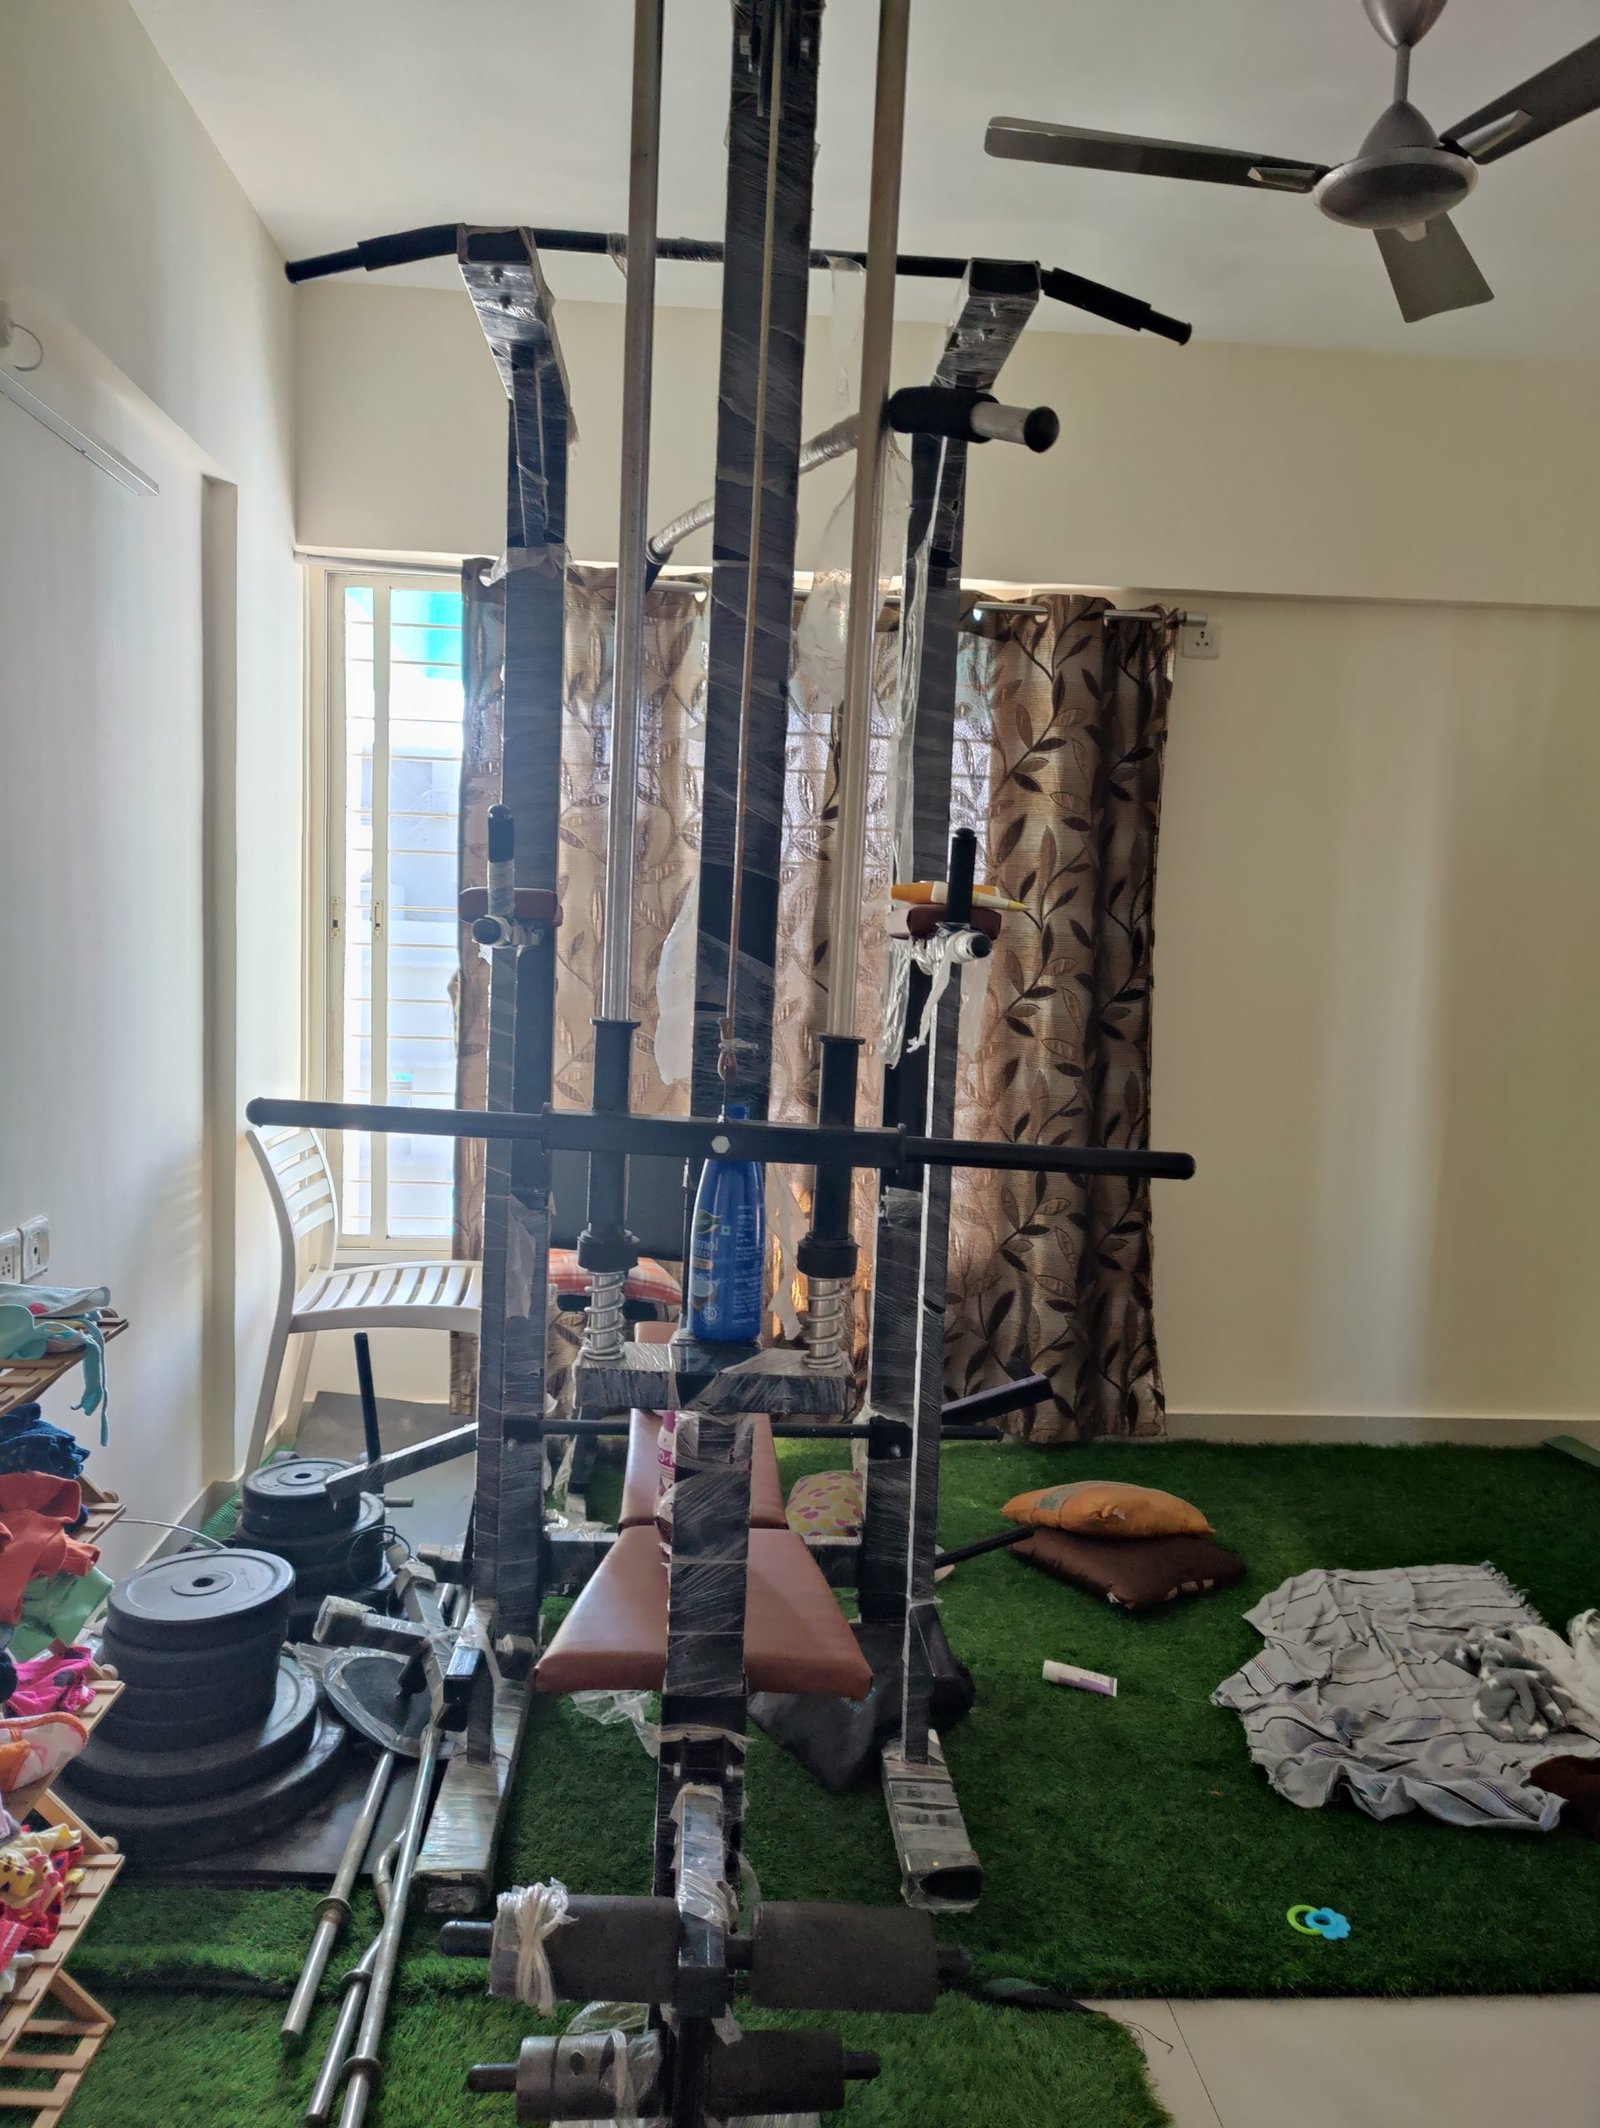 Hi, I am selling my home gym setup